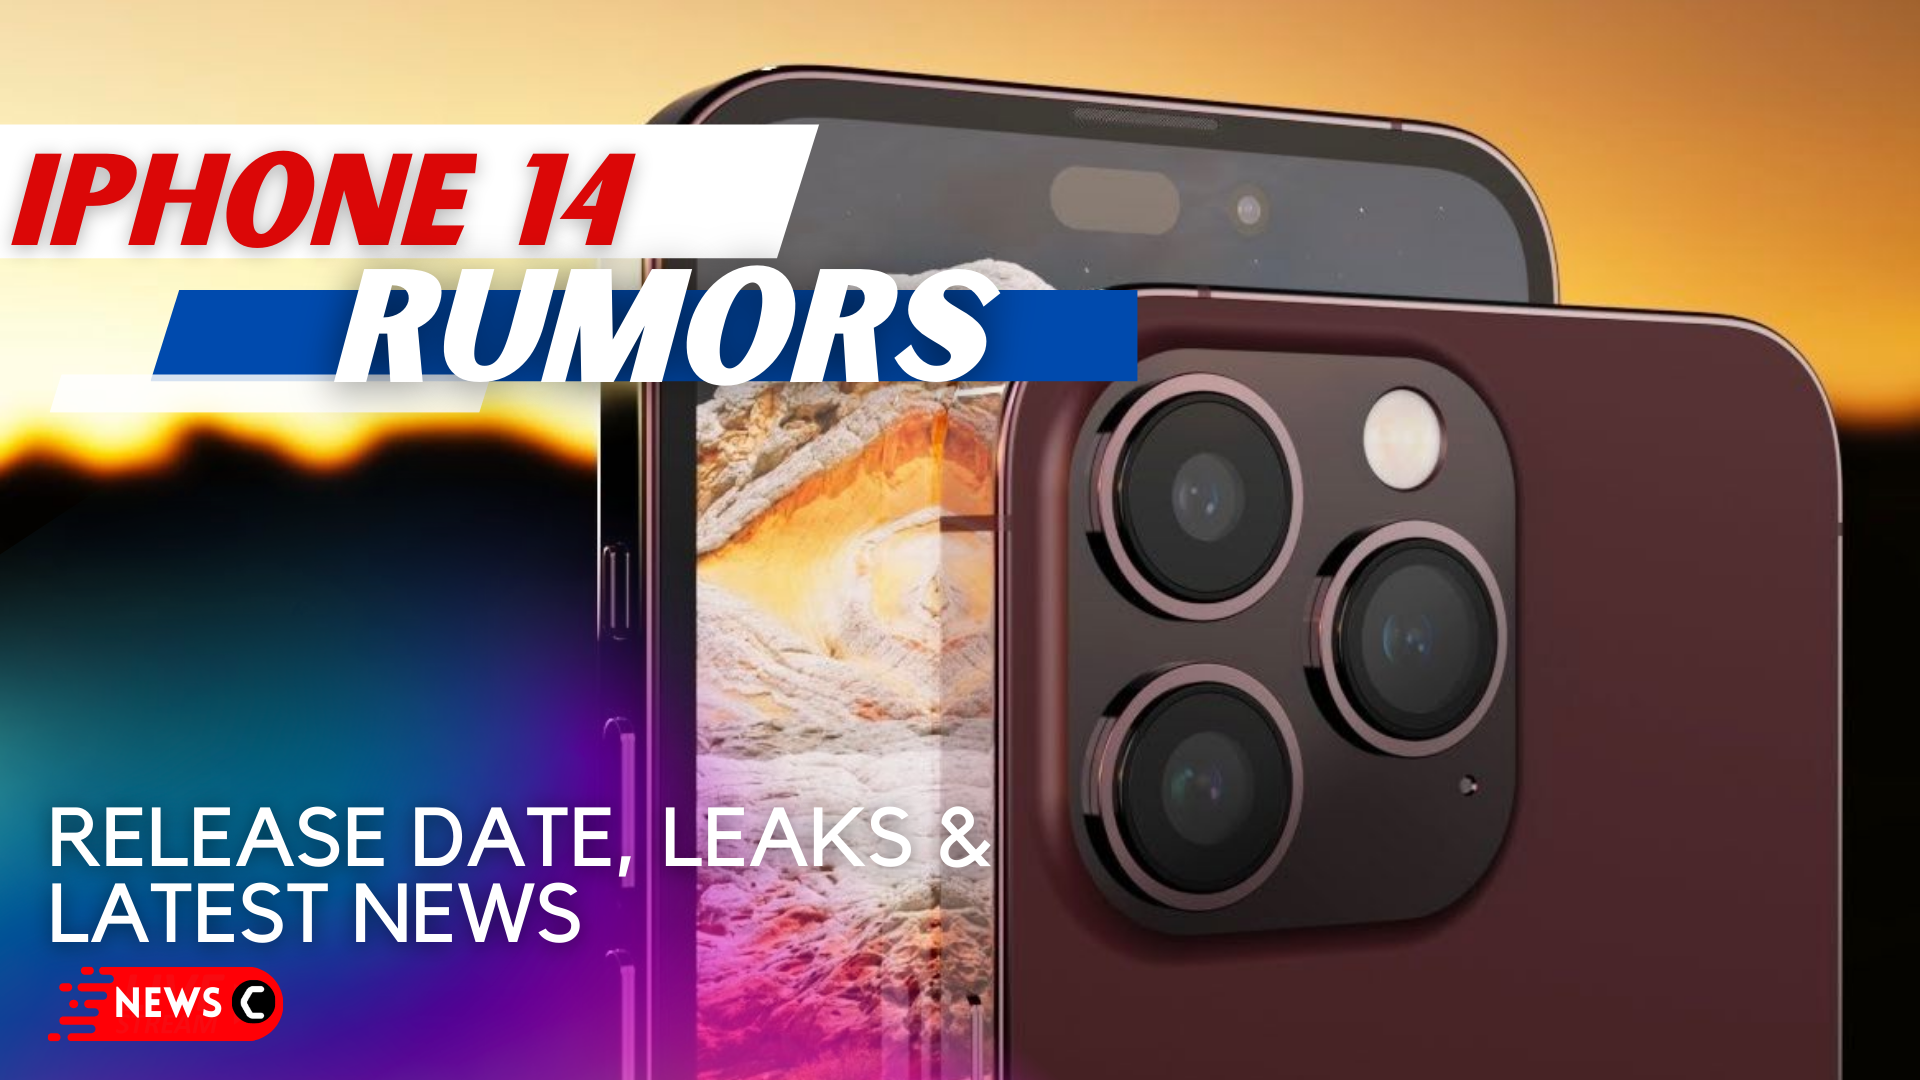 iphone 14 rumors